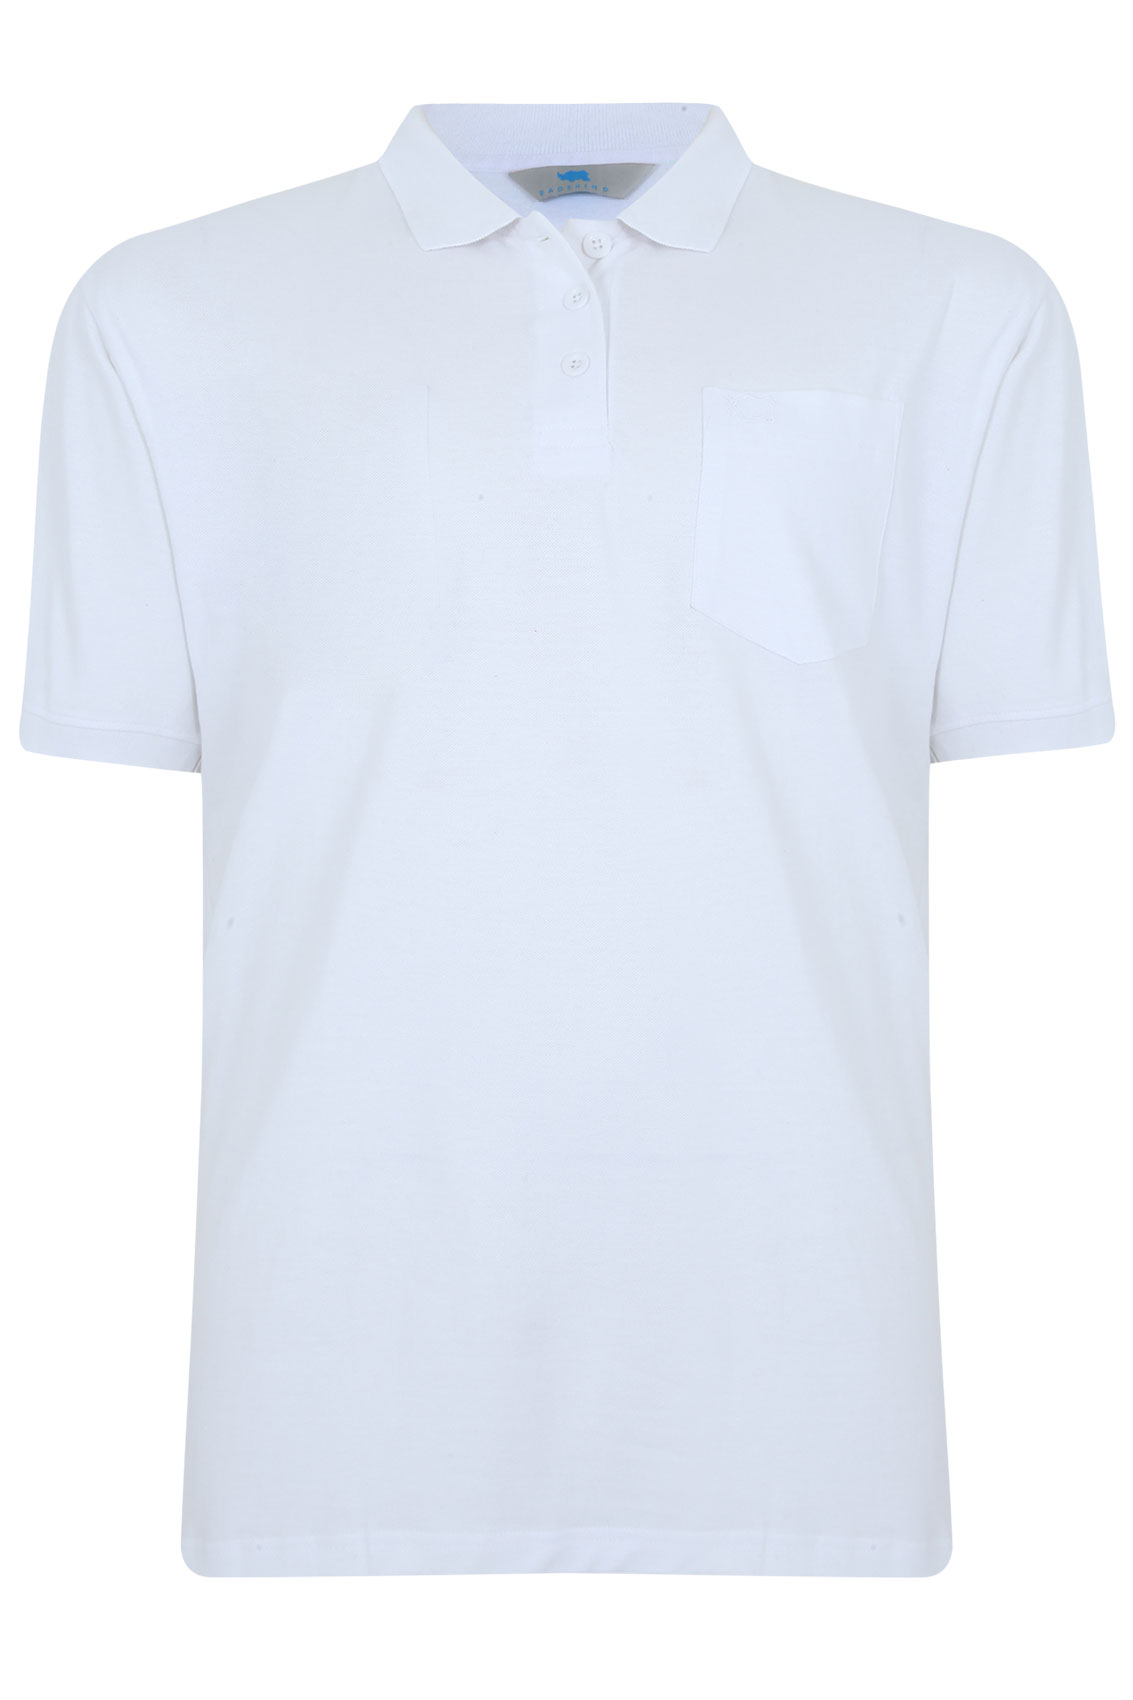 BadRhino White Plain Polo Shirt - TALL Extra large sizes M ...